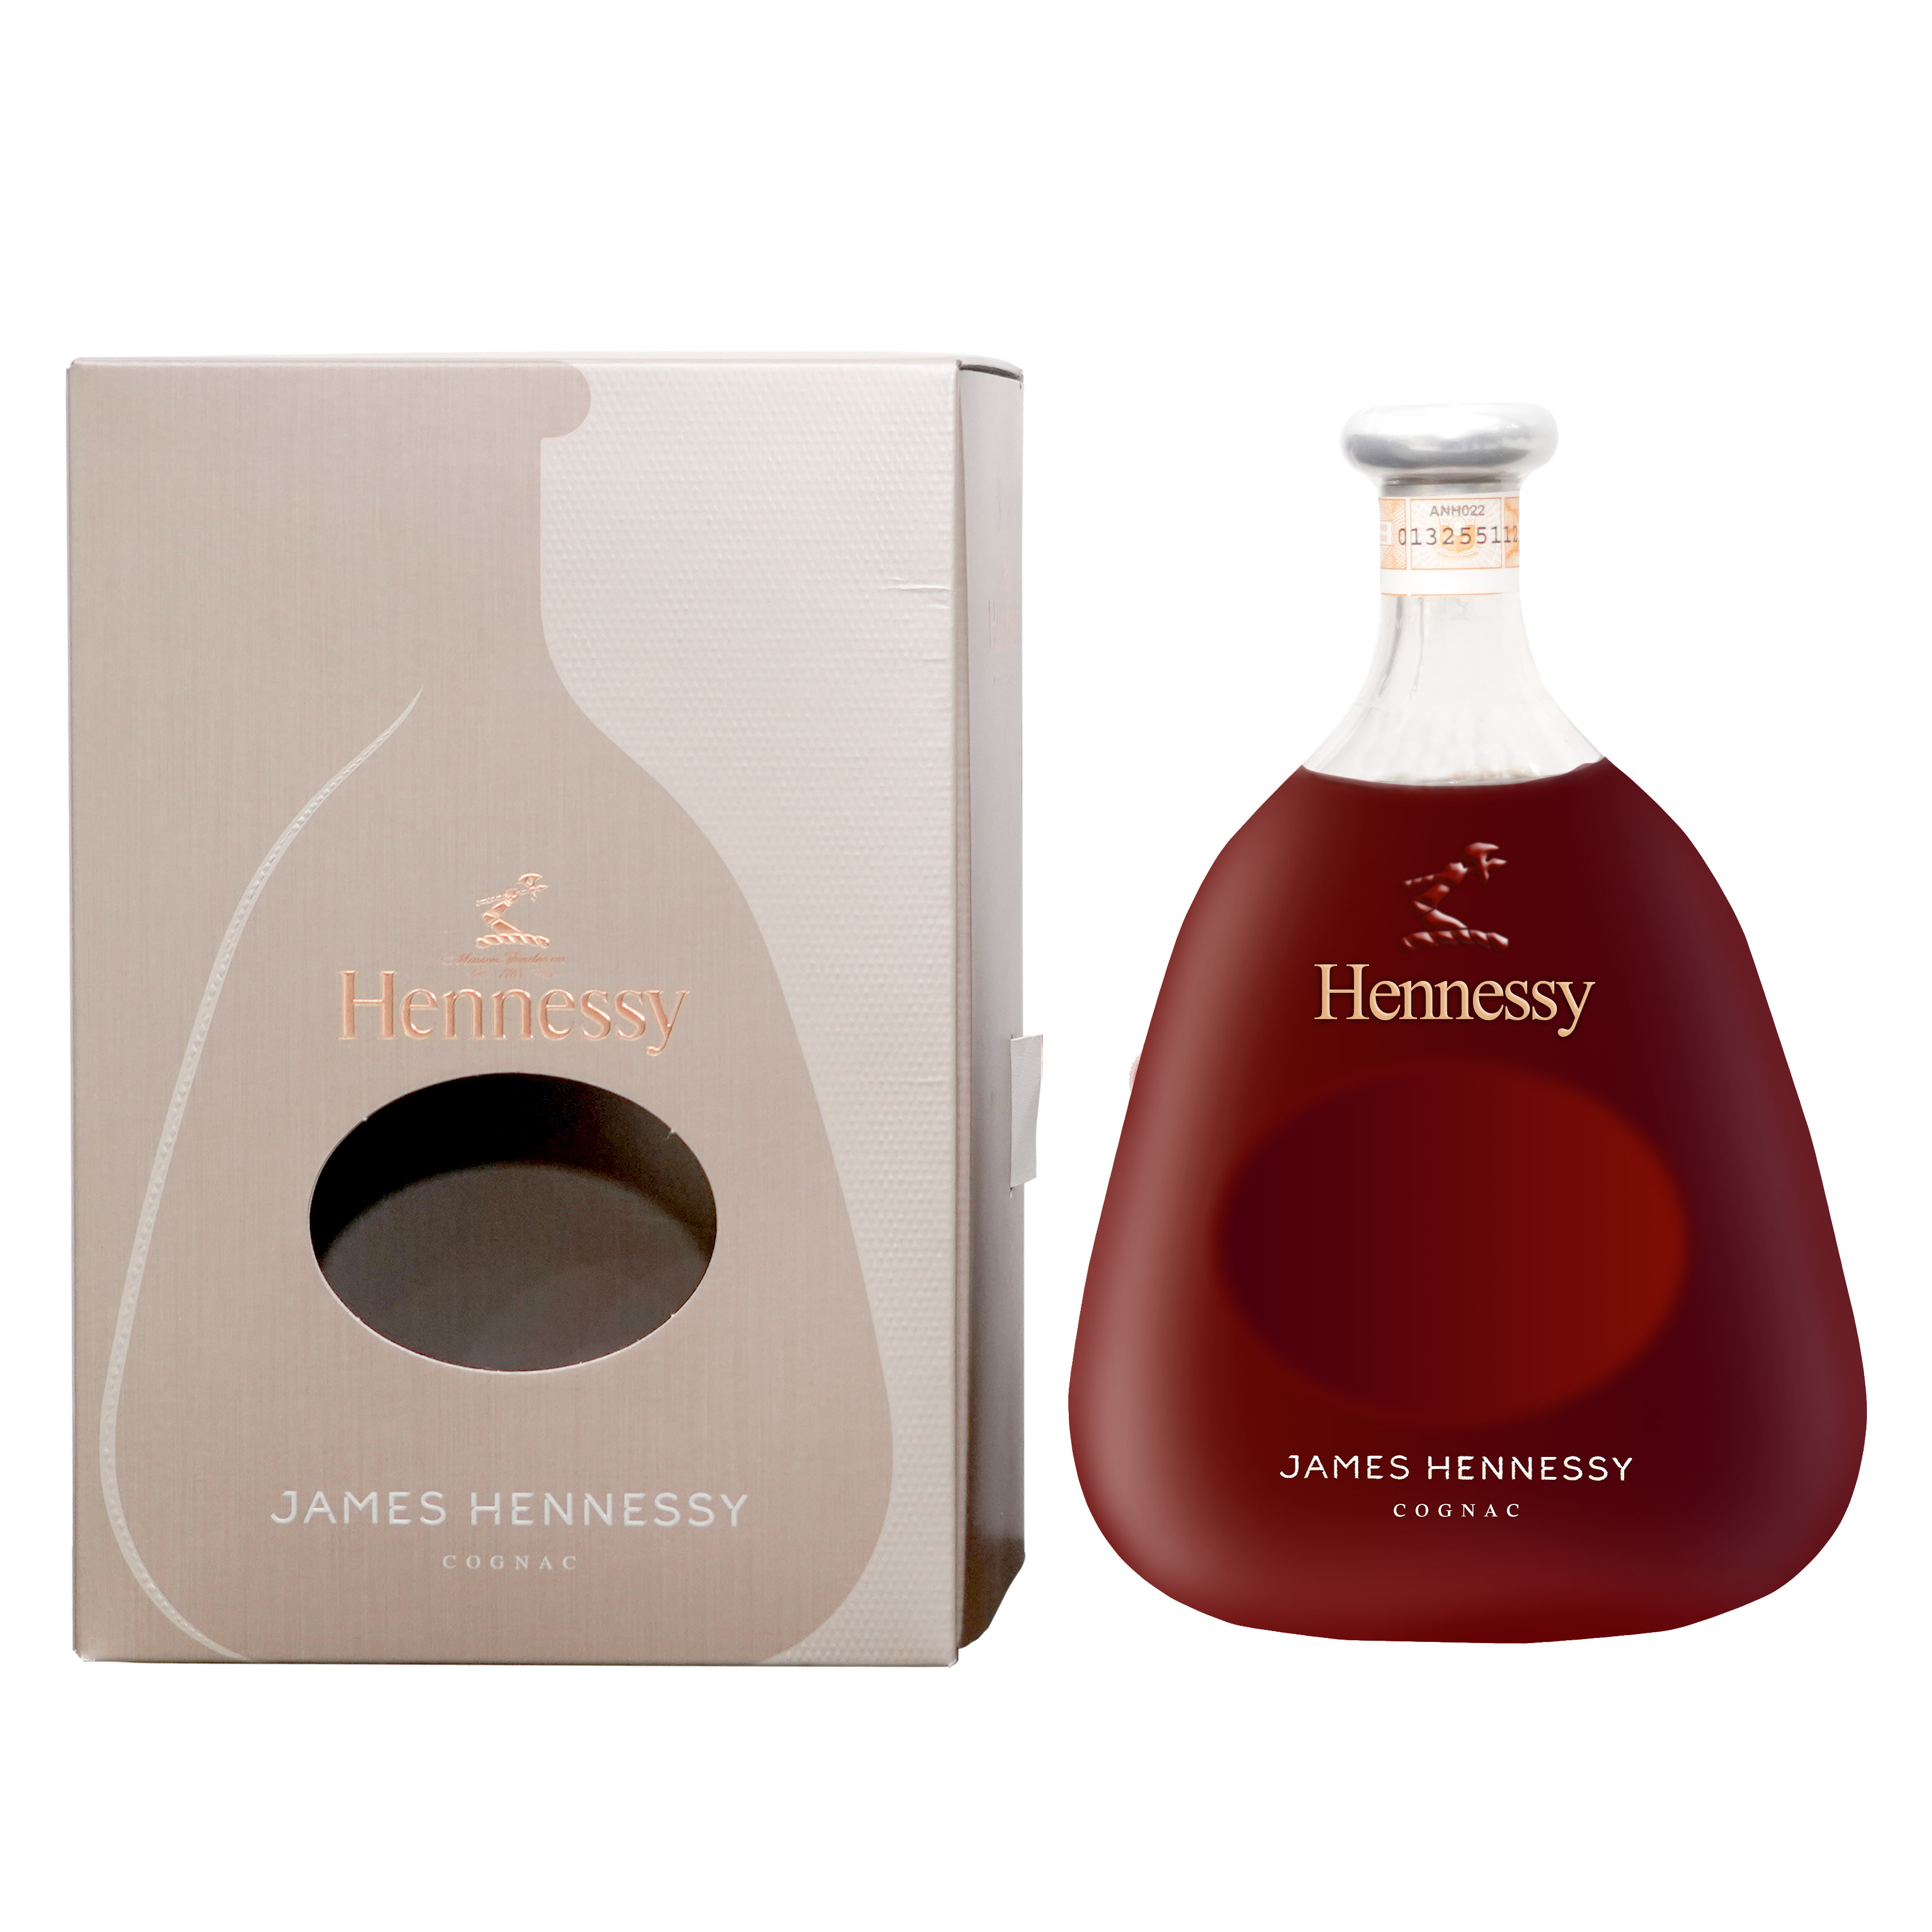 James Hennessy Cognac (1L)